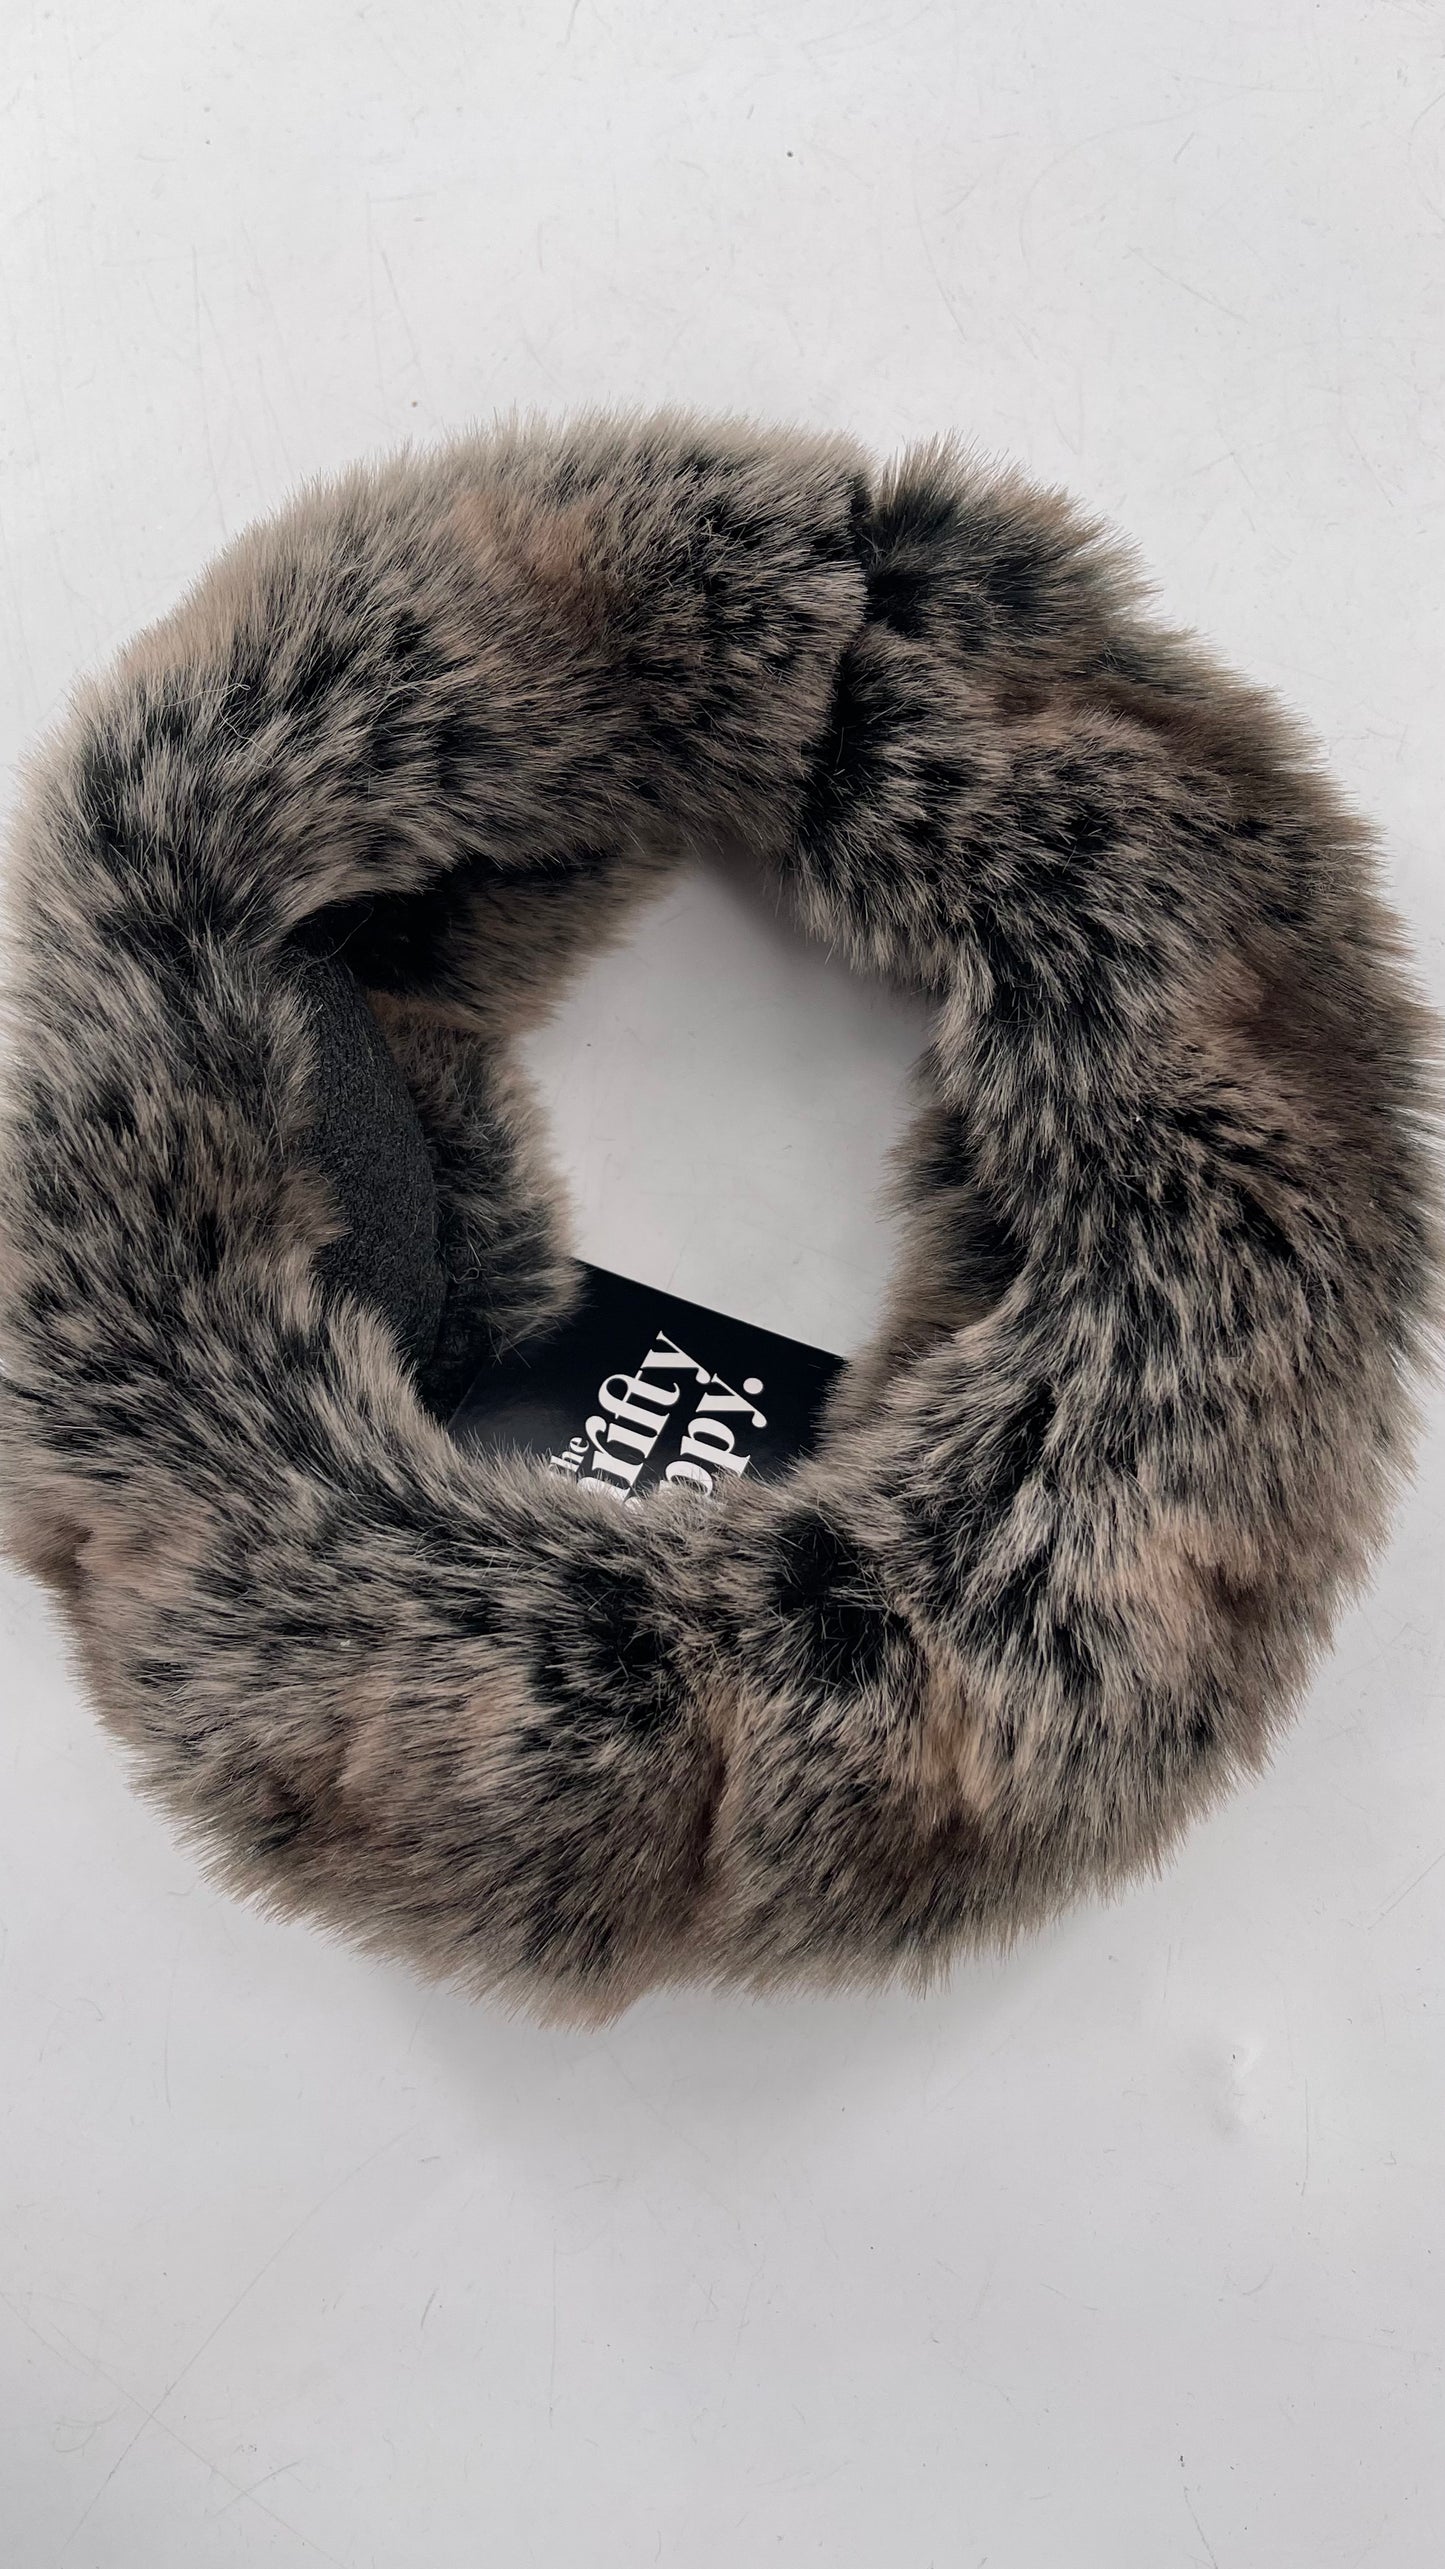 Mixed Tones Brown/Grey Fluffy Furry Headband